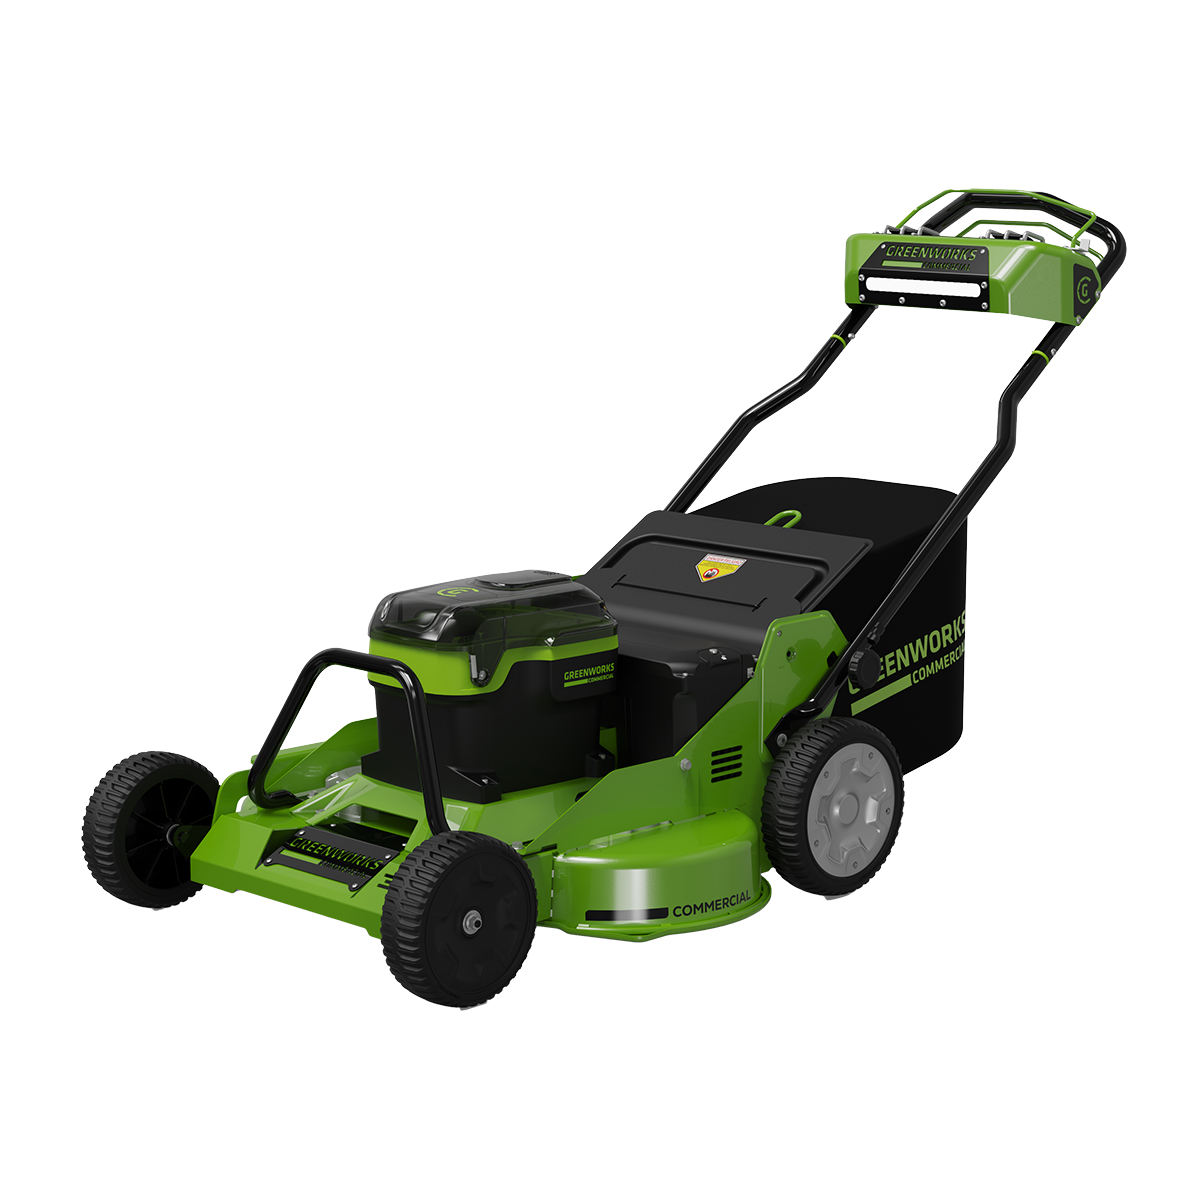 Greenworks 82v 30" Self-Propelled Lawnmower